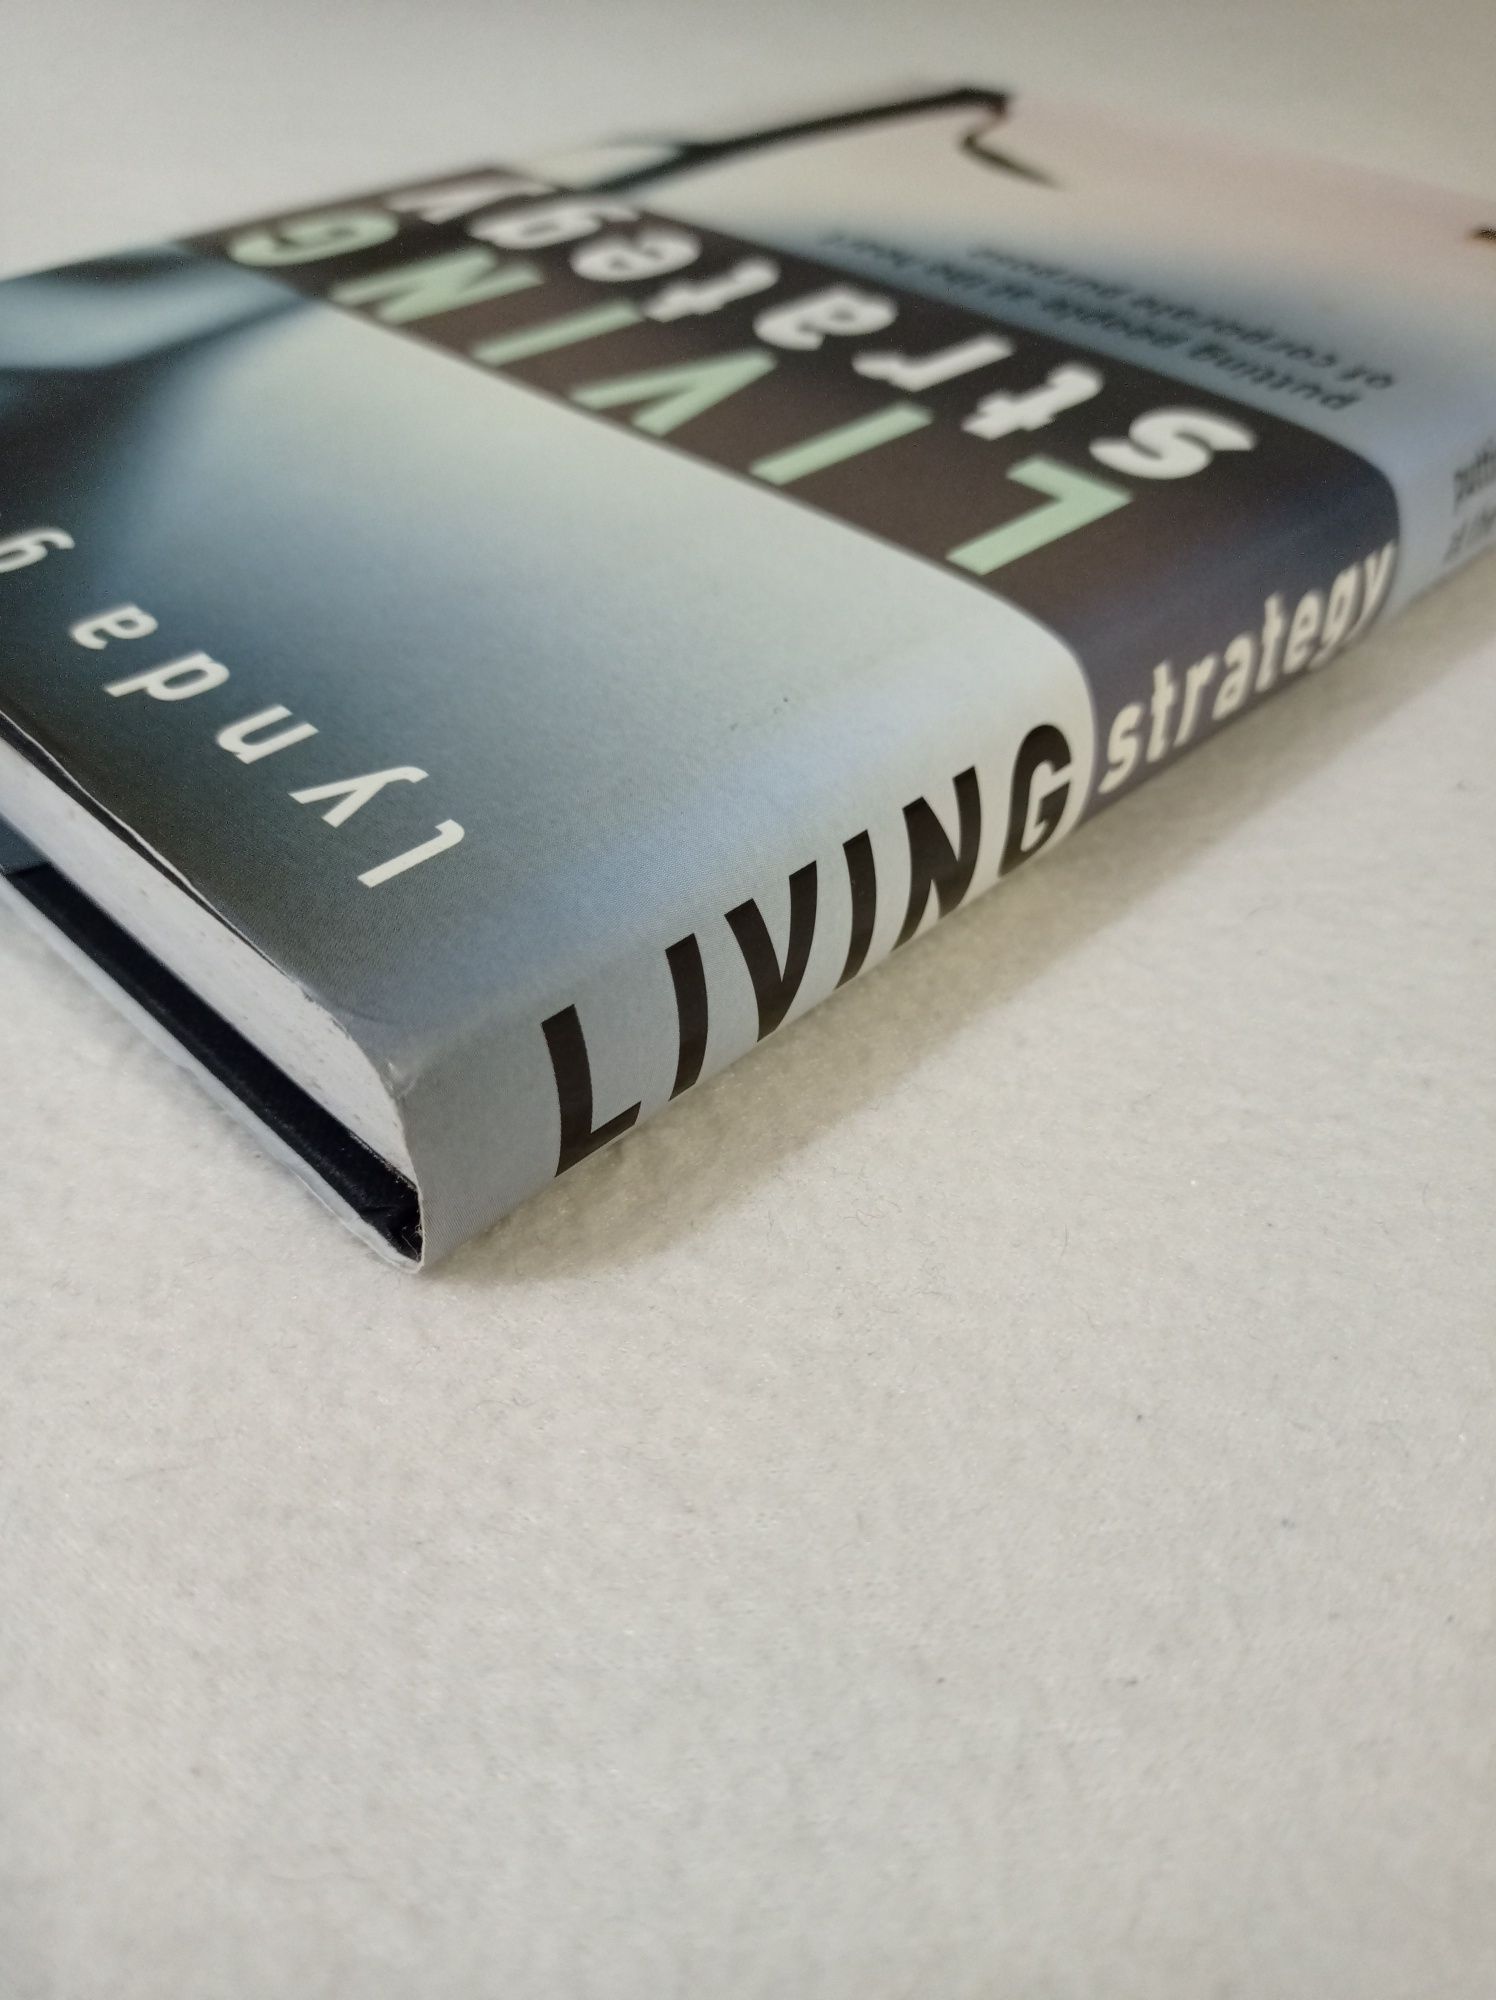 Living strategy - Lynda Gratton